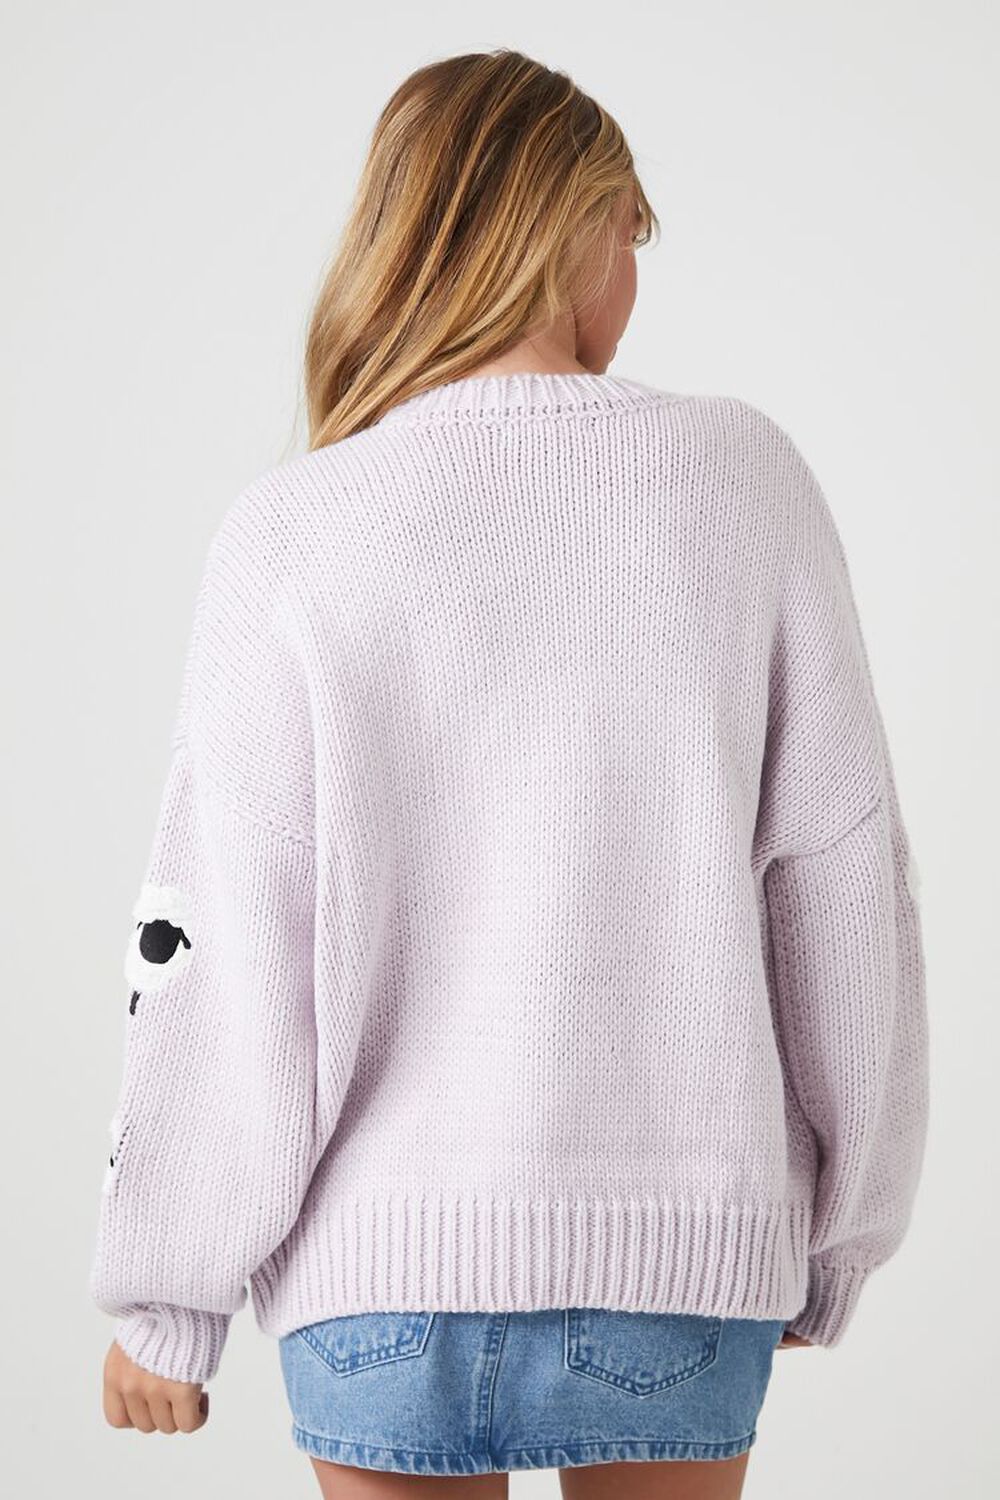 LAVENDER Sheep Drop-Sleeve Sweater, image 3